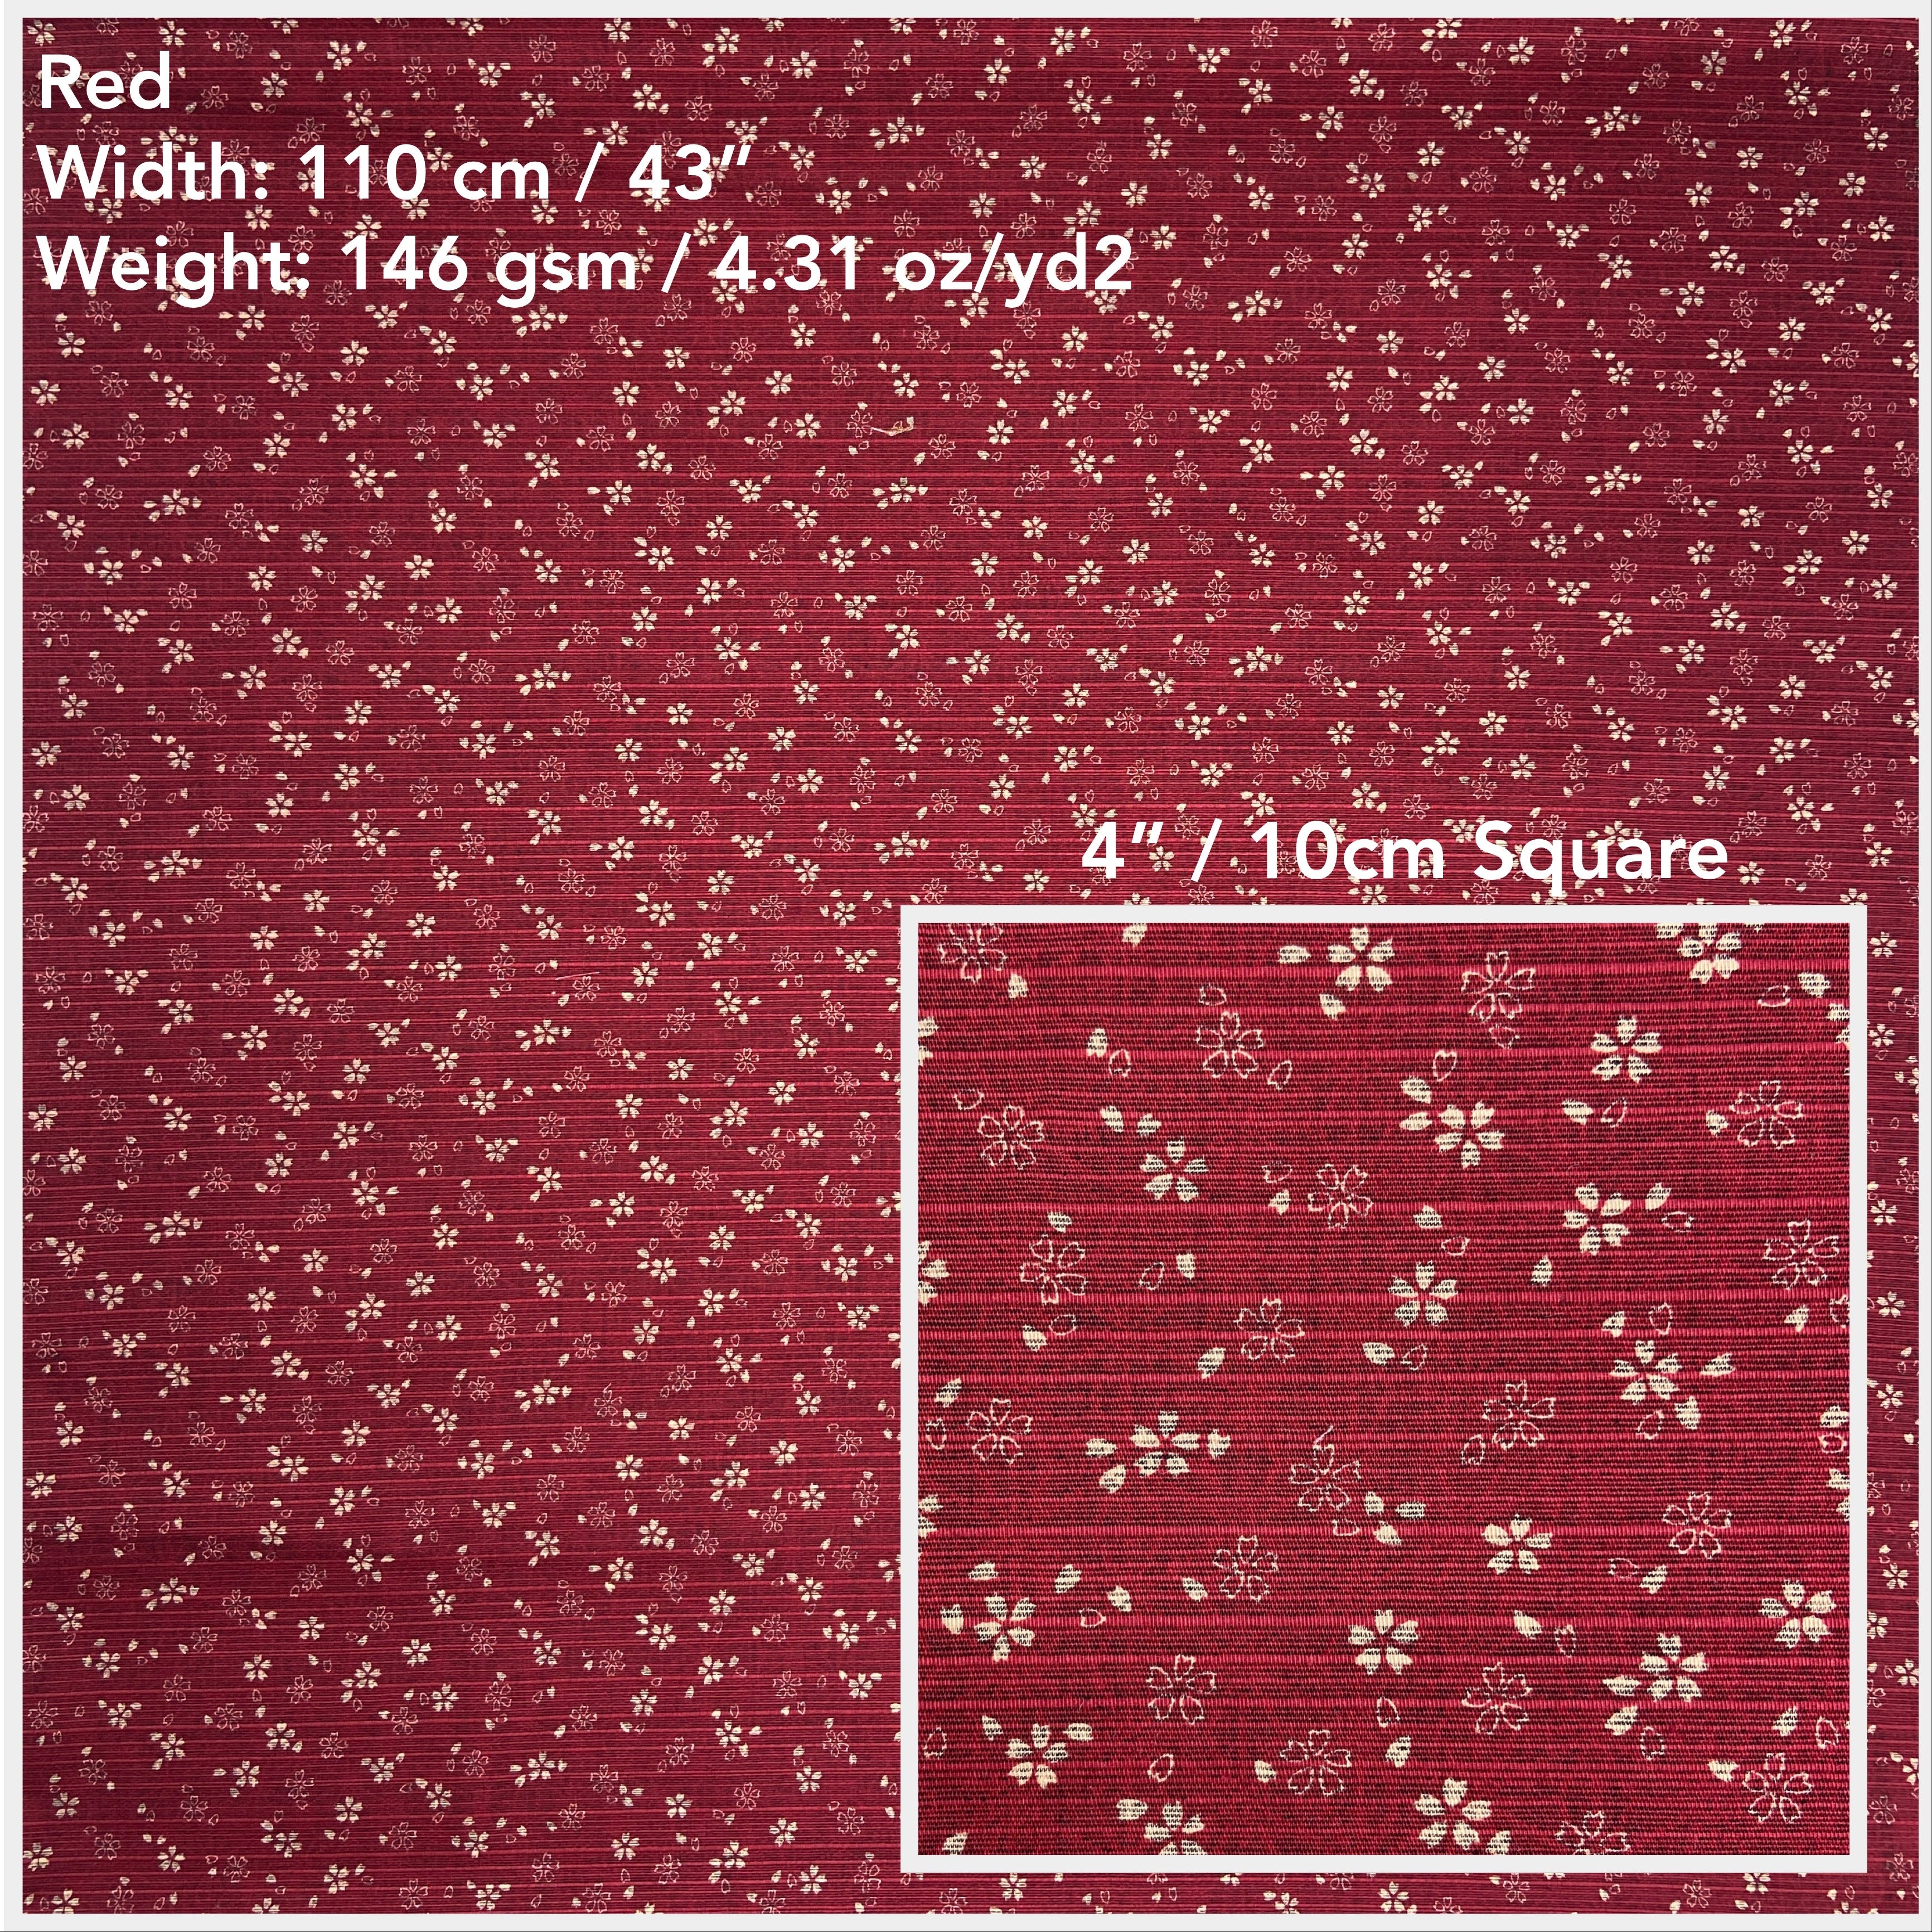 Japanese Cotton Shantung Dobby Print - Red Sakura and Black Hemp Leaves